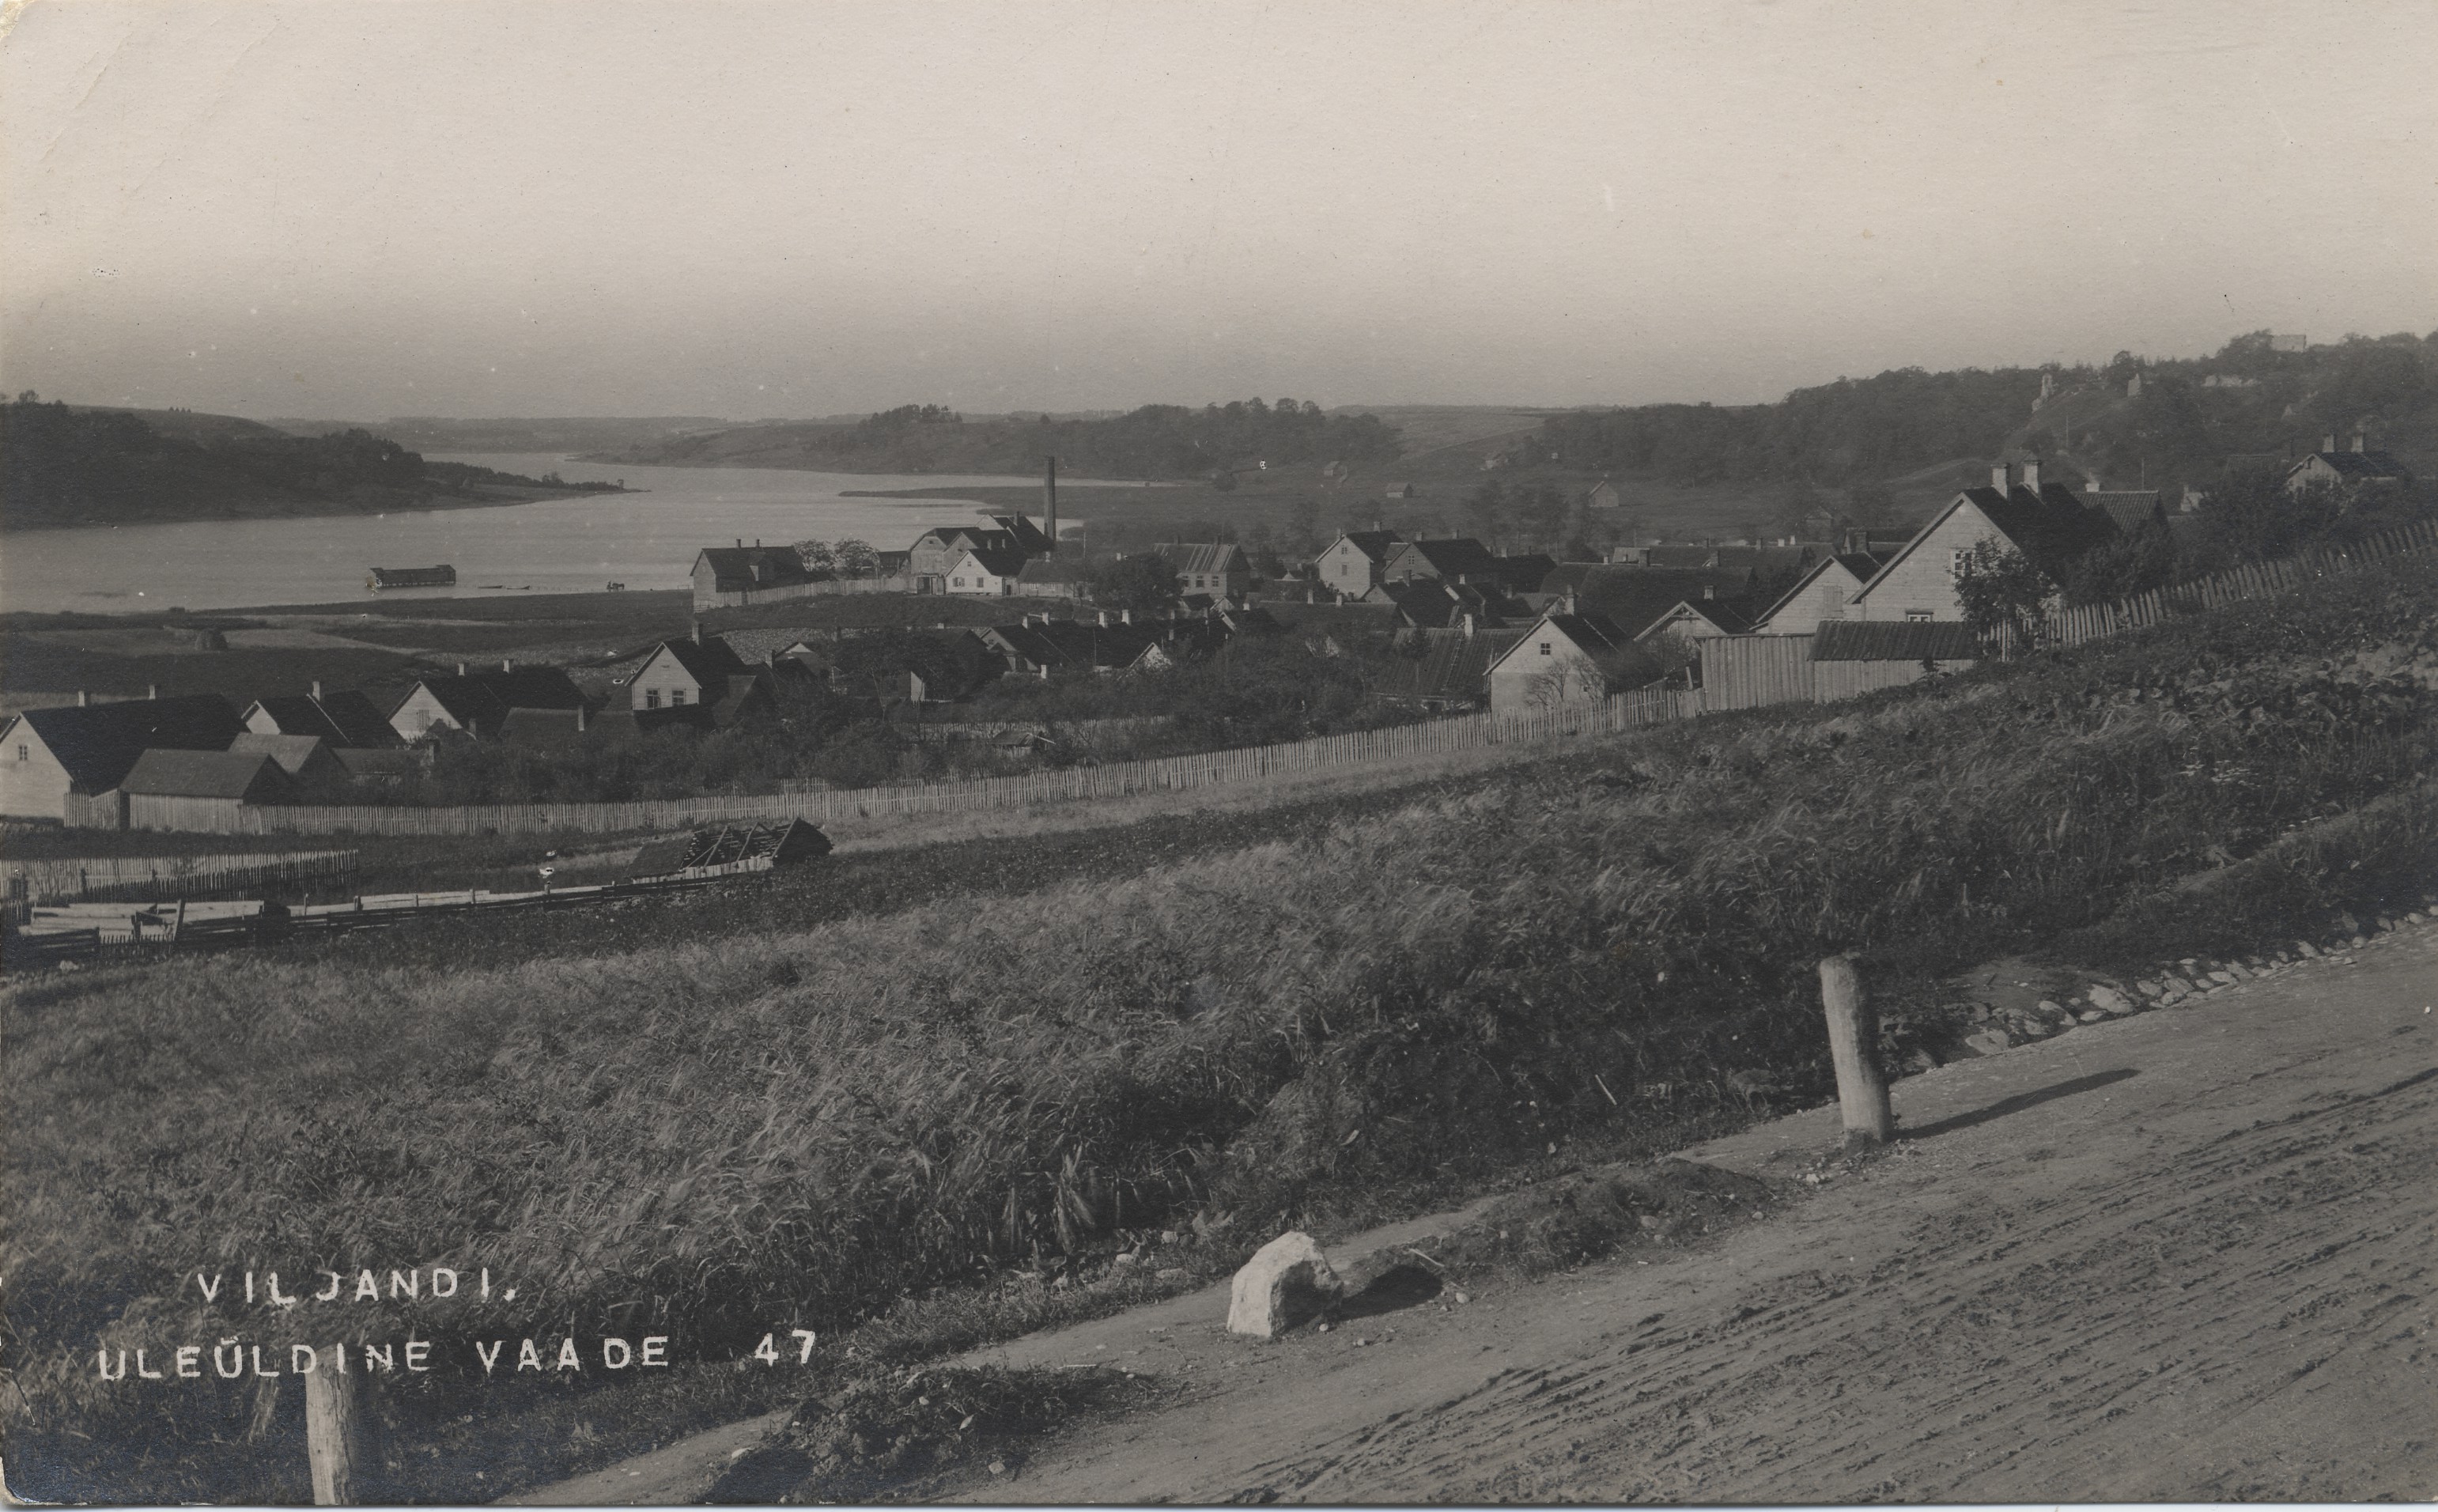 Viljandi's overall view